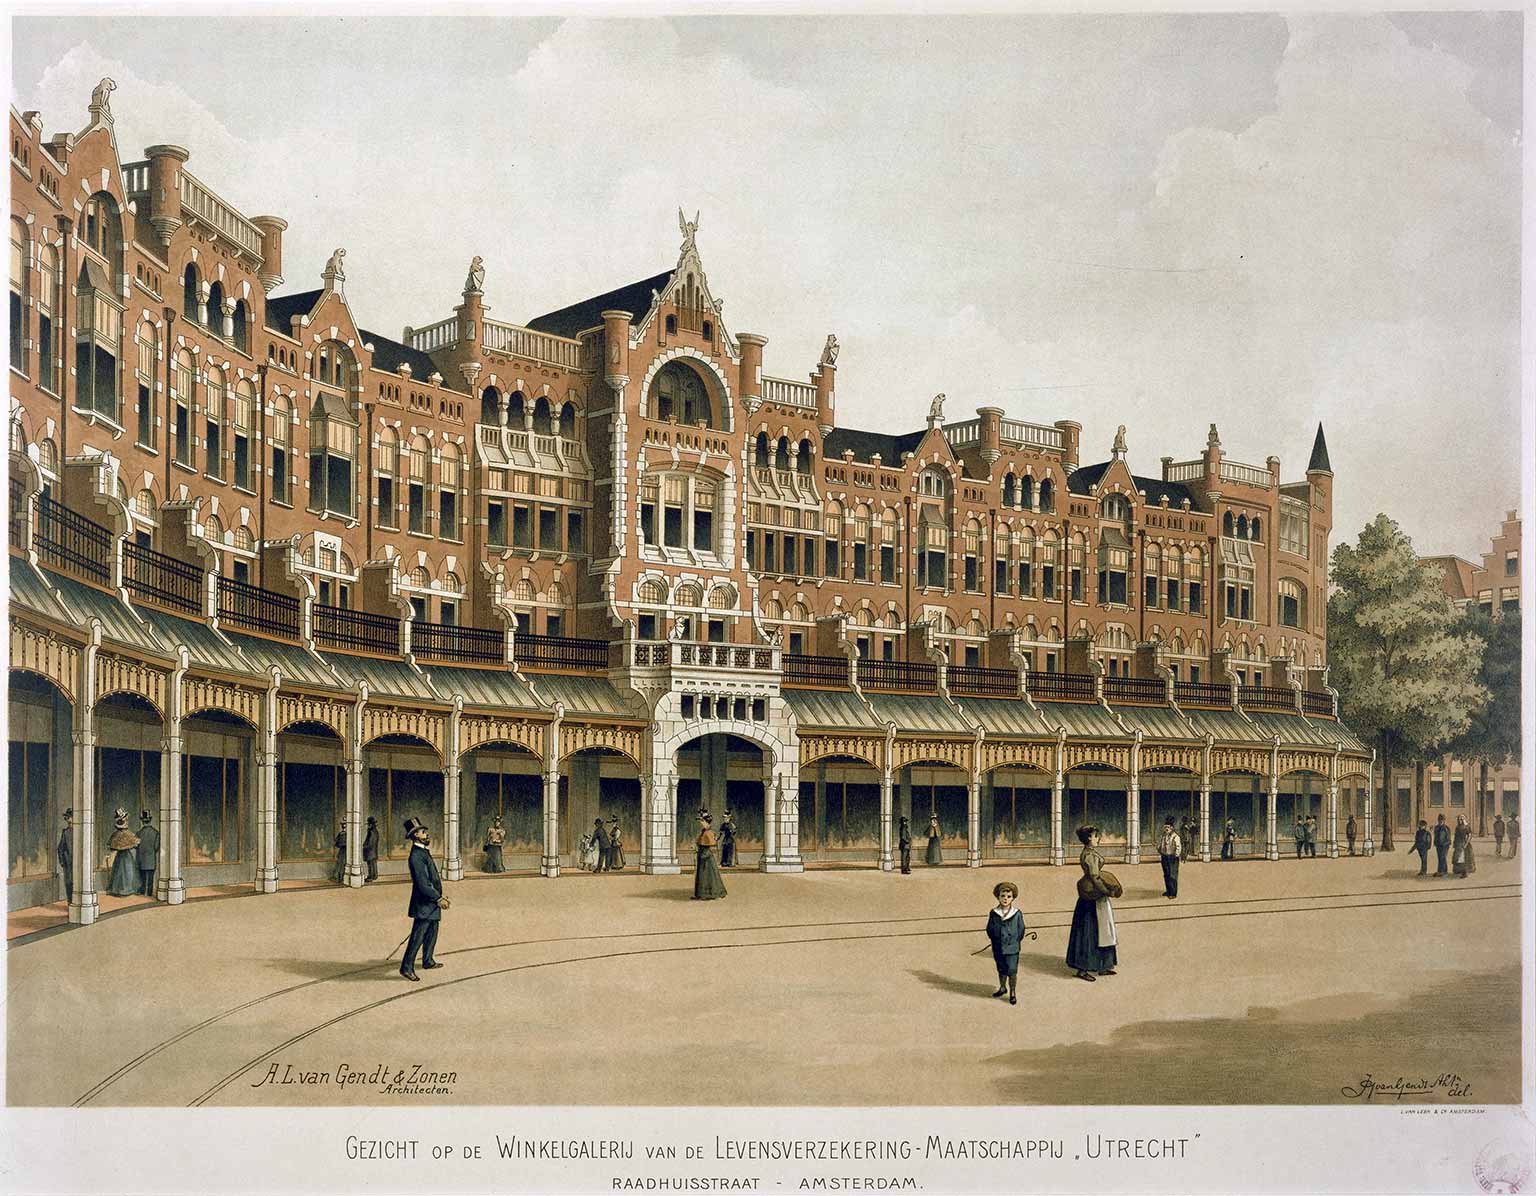 Shopping arcade on the Raadhuisstraat, Amsterdam, around 1900